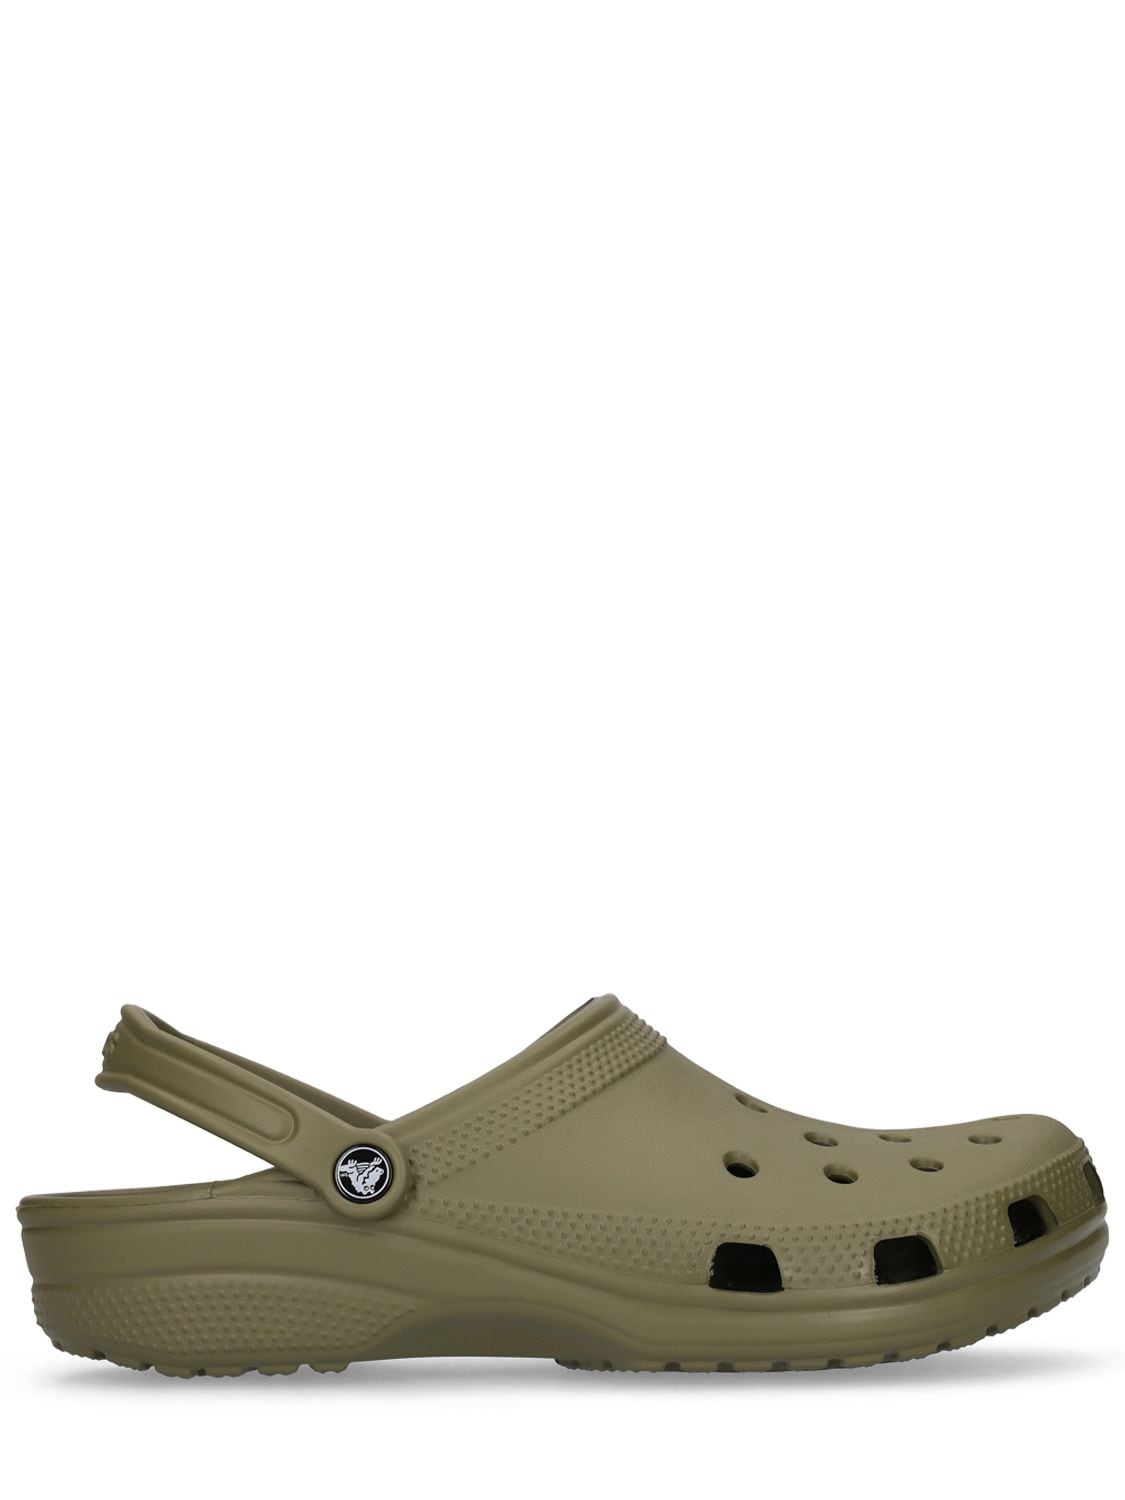 Crocs Classic Sandals In Olive Green | ModeSens